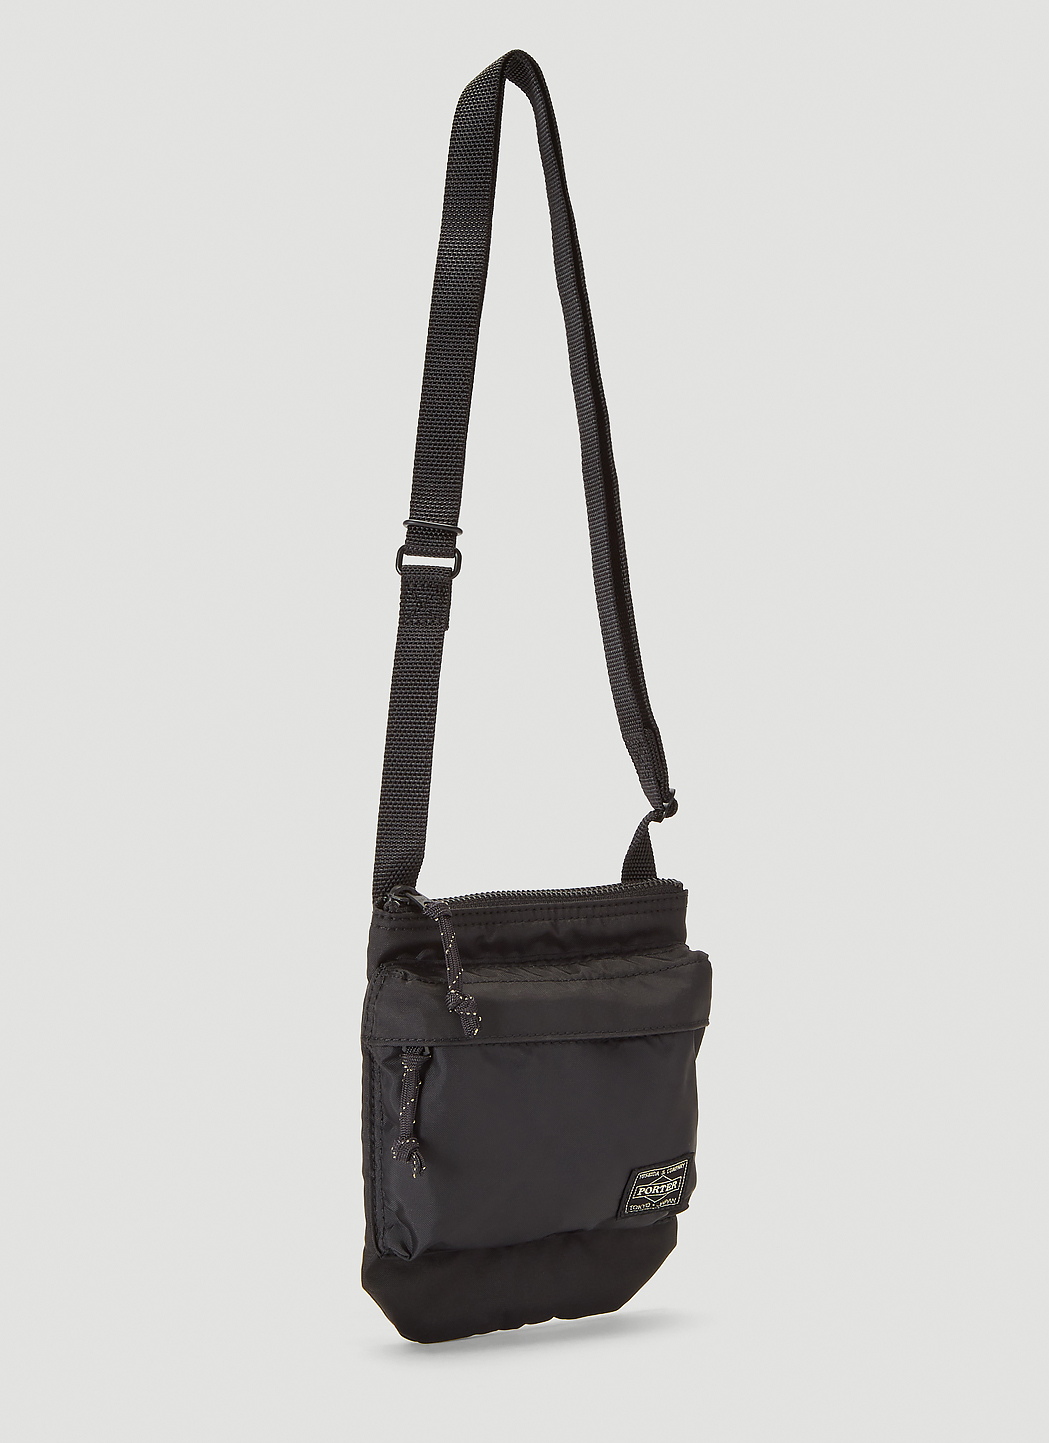 Porter-Yoshida & Co. Unisex Shoulder Pouch Crossbody Bag in Black | LN-CC